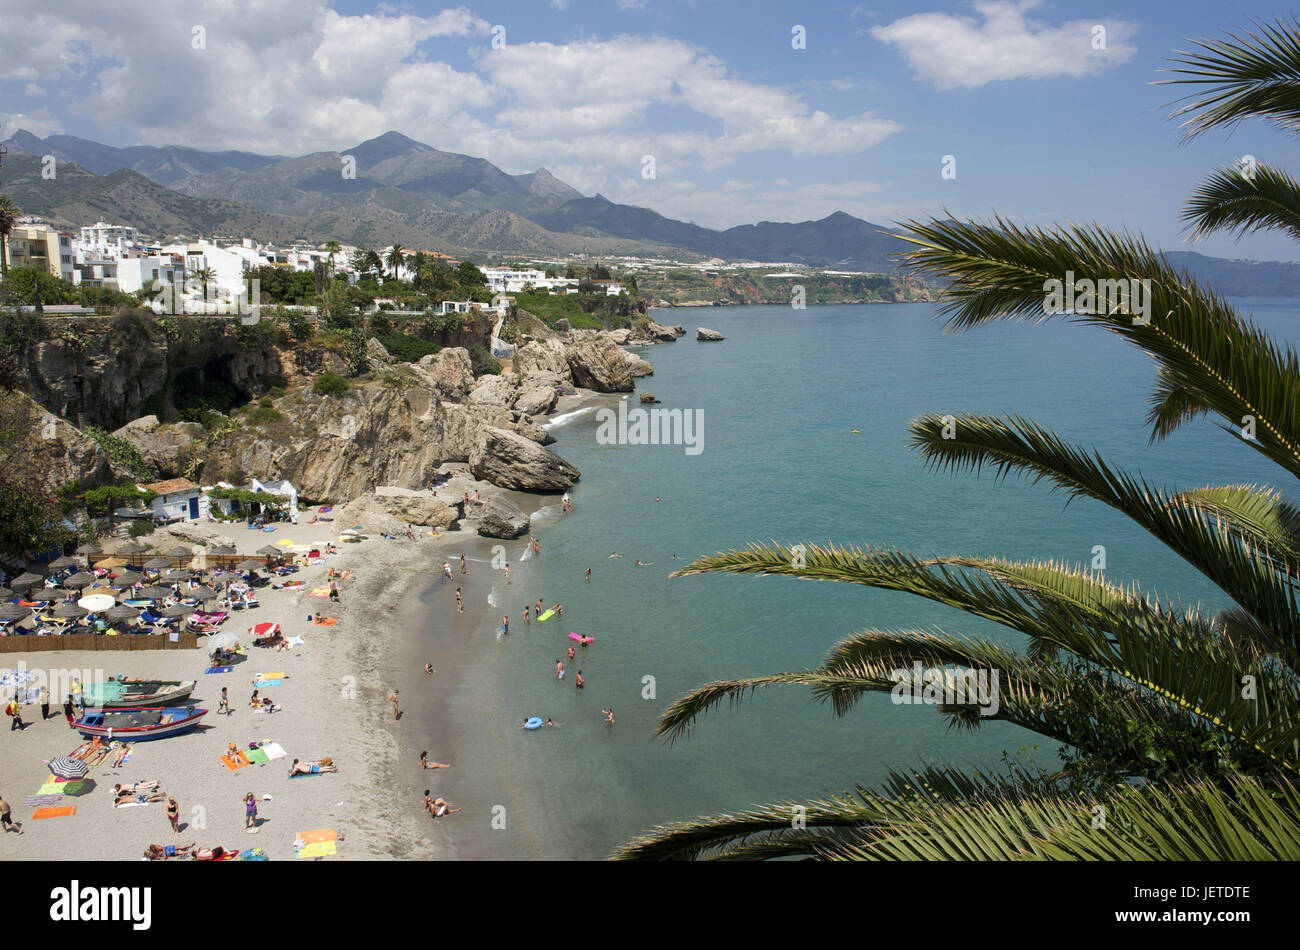 Spain, Andalusia, Costa del Sol, Nerja, beach on a bile coast, Stock Photo